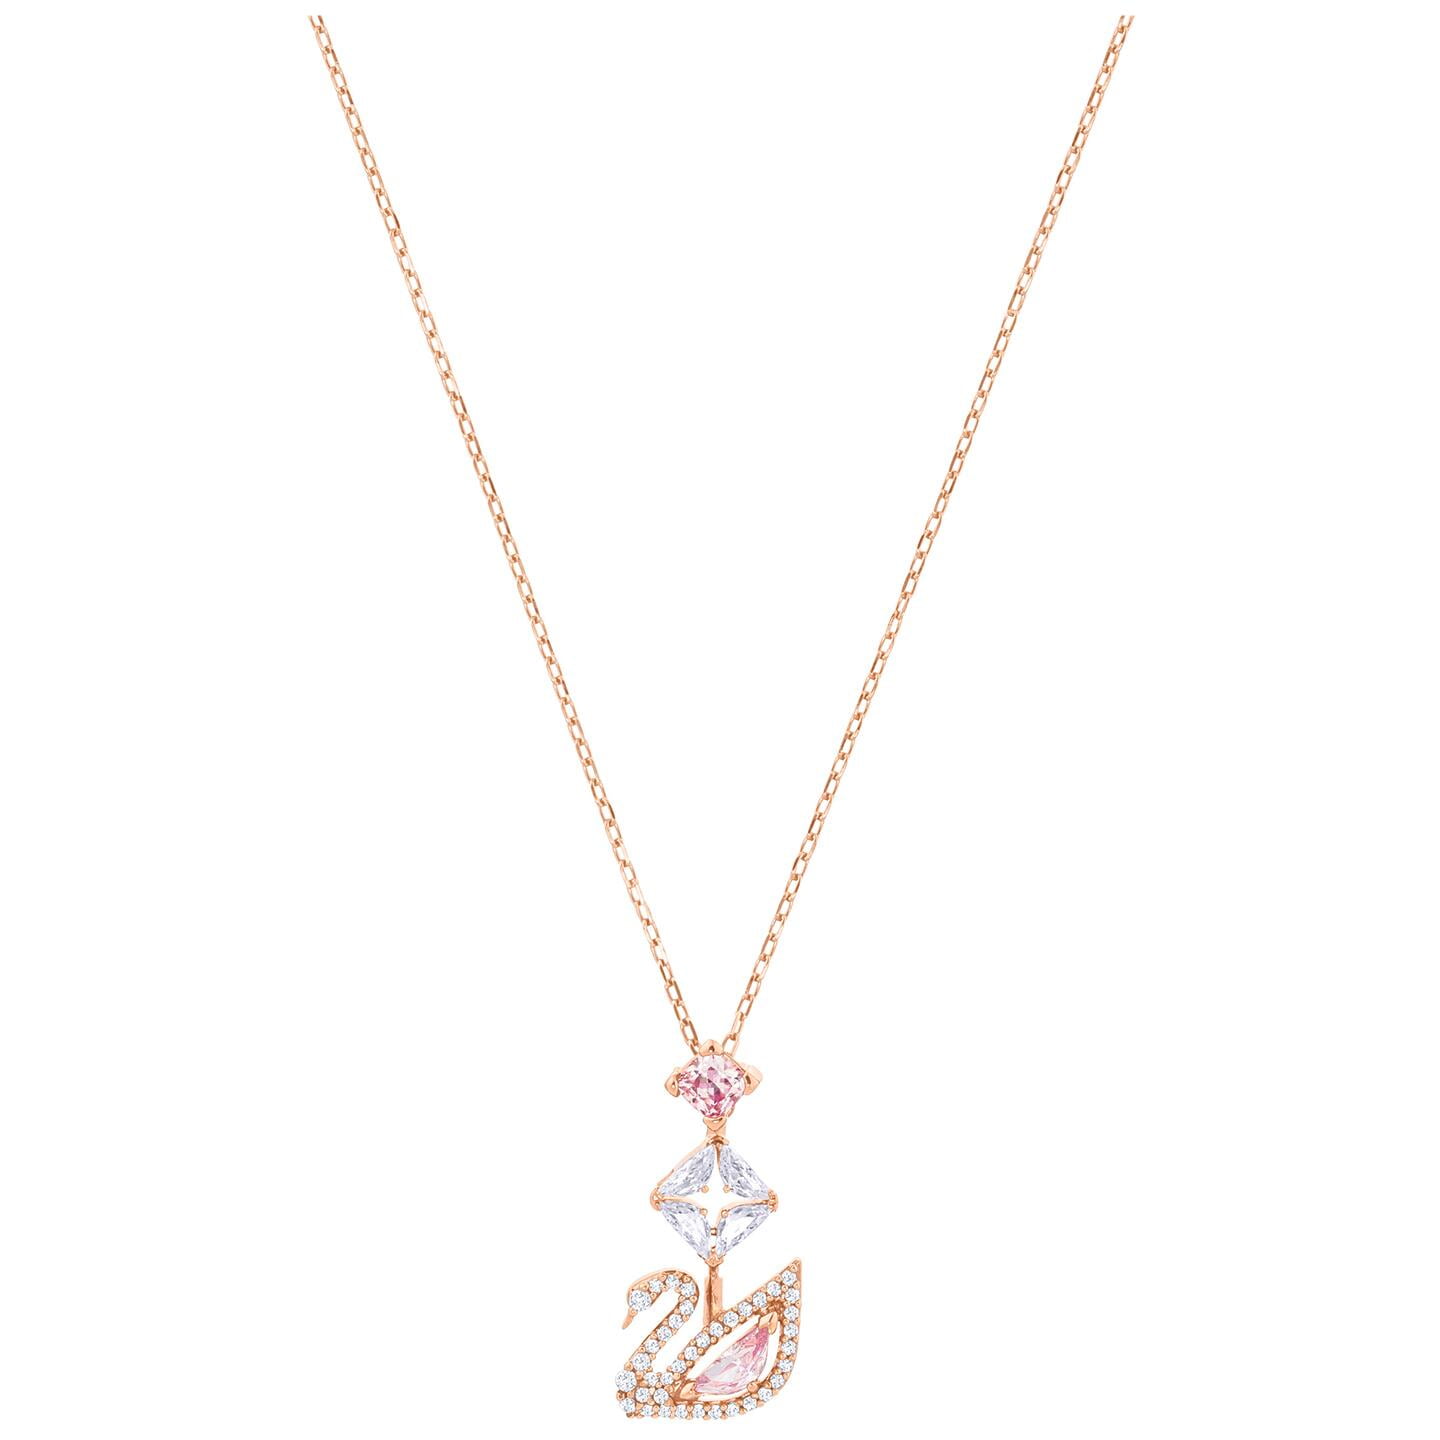 Howlite Swan Pendant necklace silver chain for women – Kiri Kiri